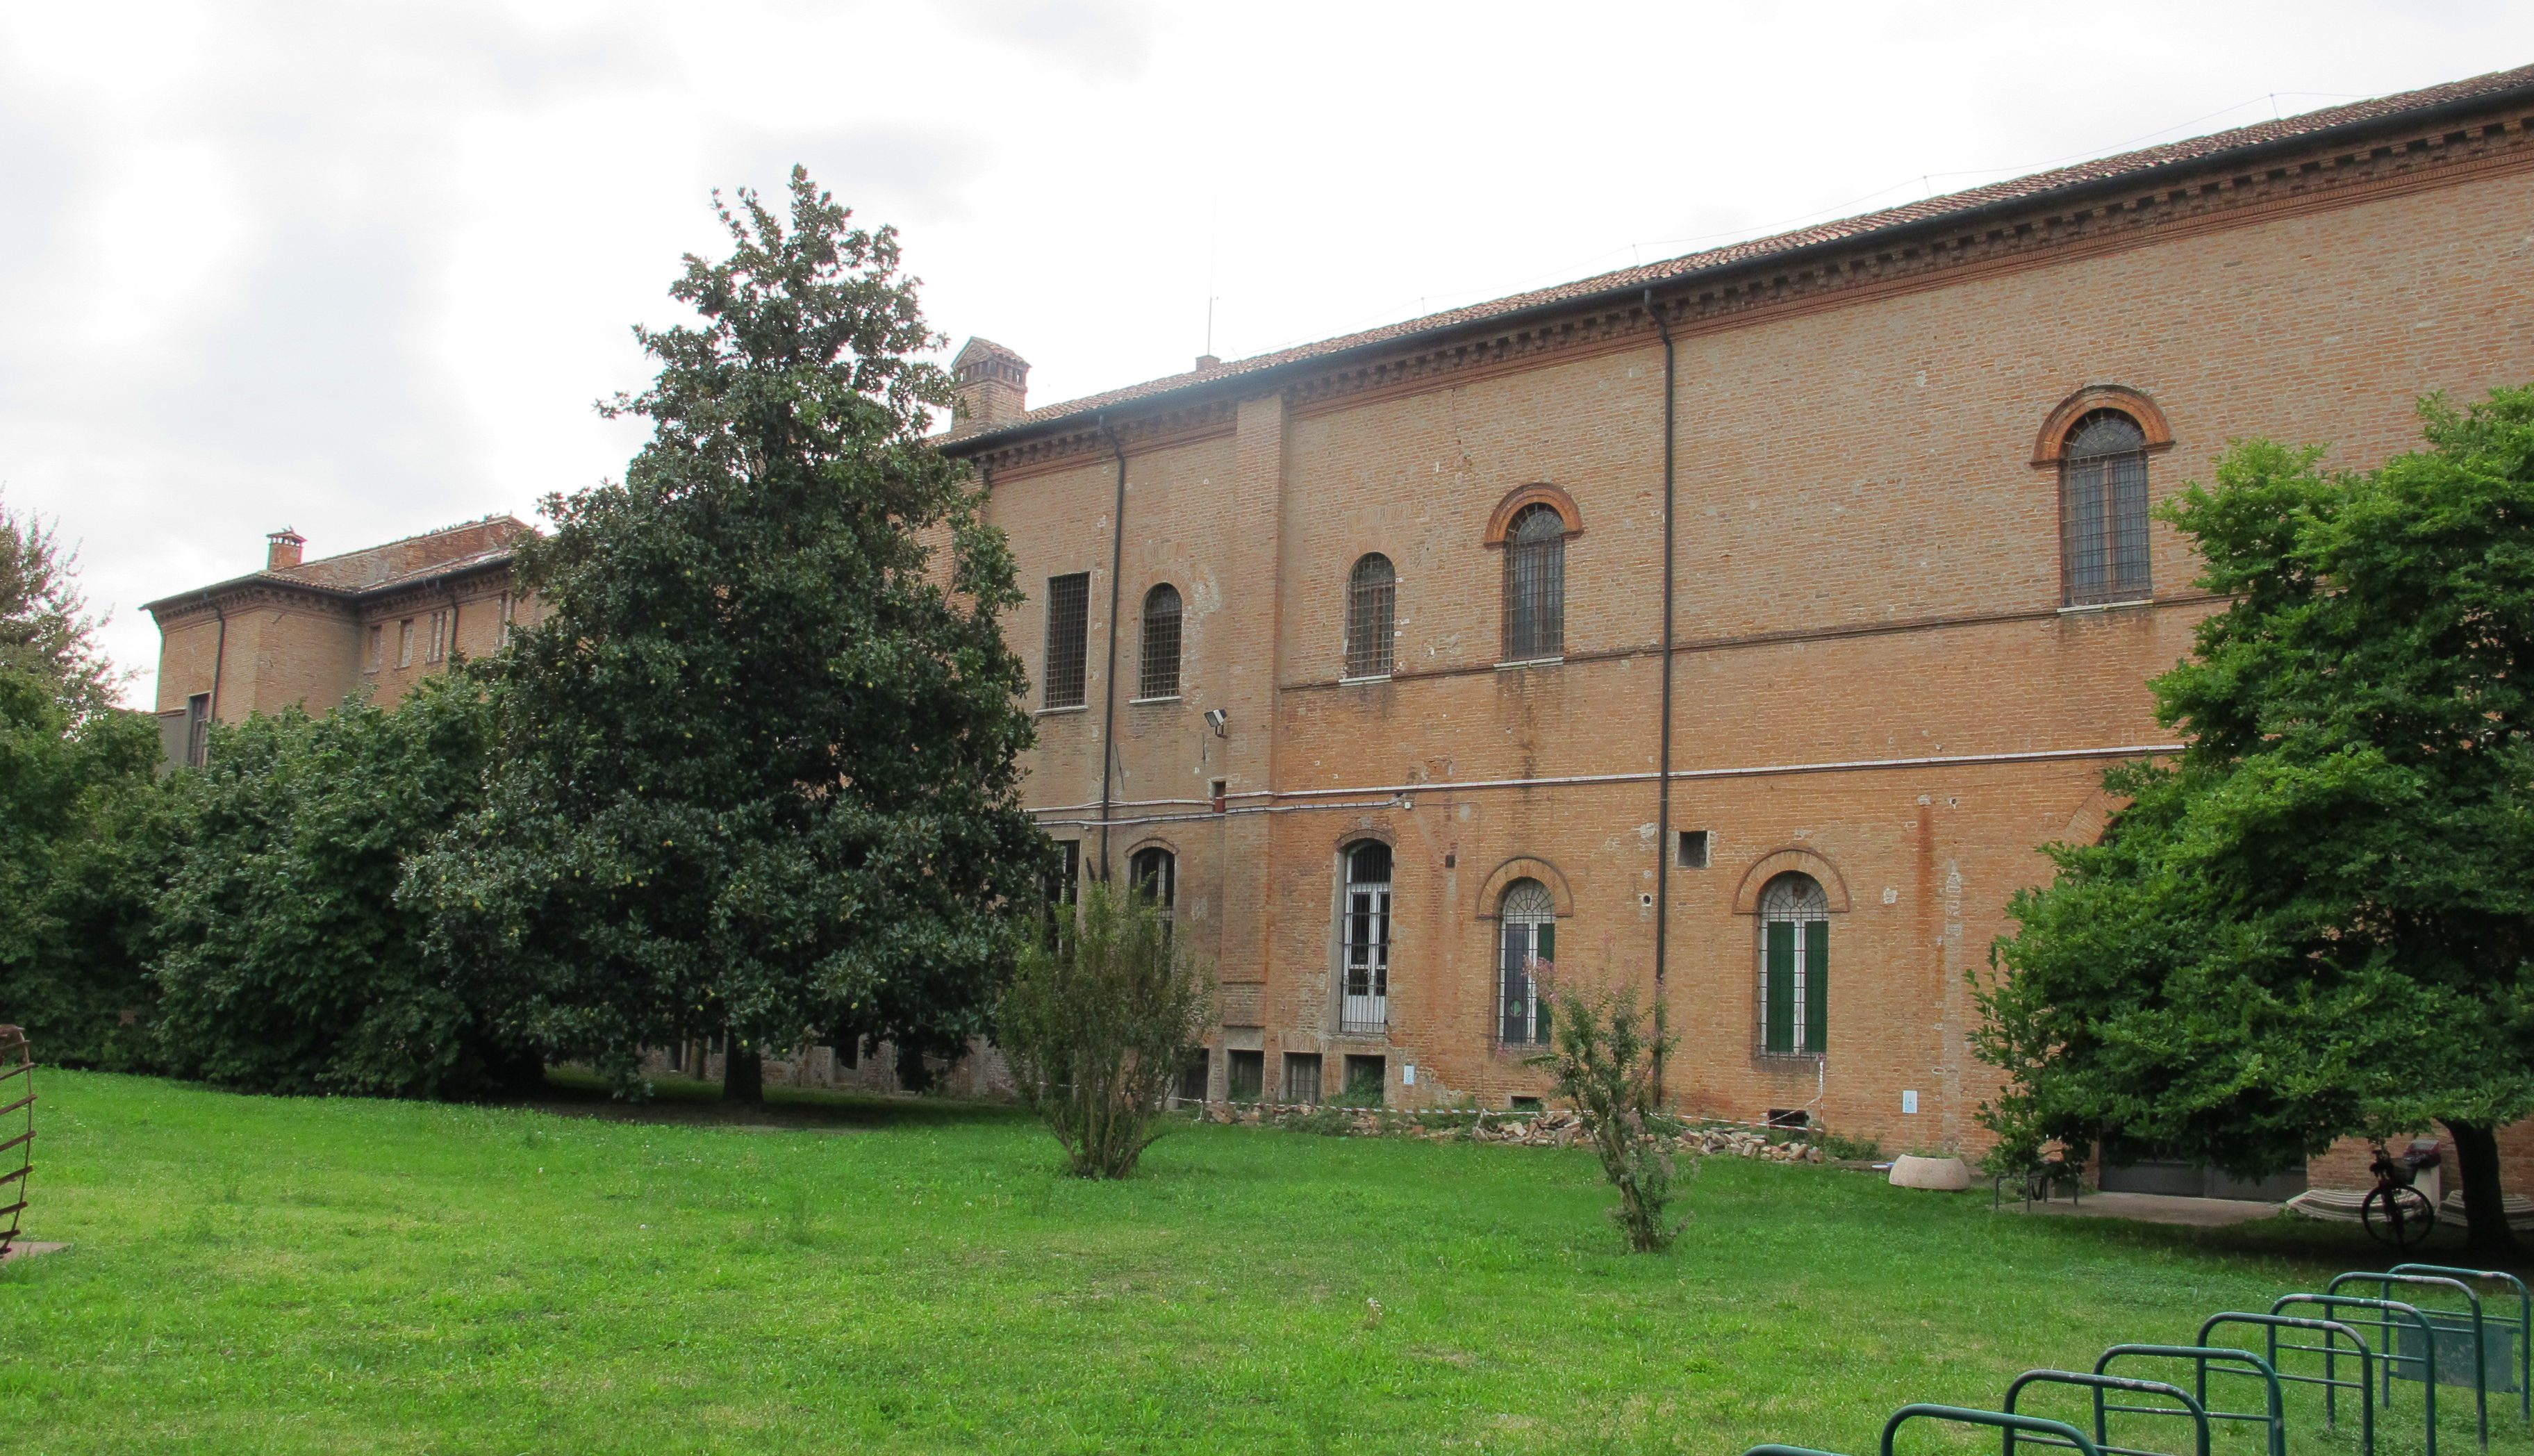 foto: https://upload.wikimedia.org/wikipedia/commons/6/6e/Palazzo_schifanoia%2C_ext.%2C_lato_giardino_01.JPG